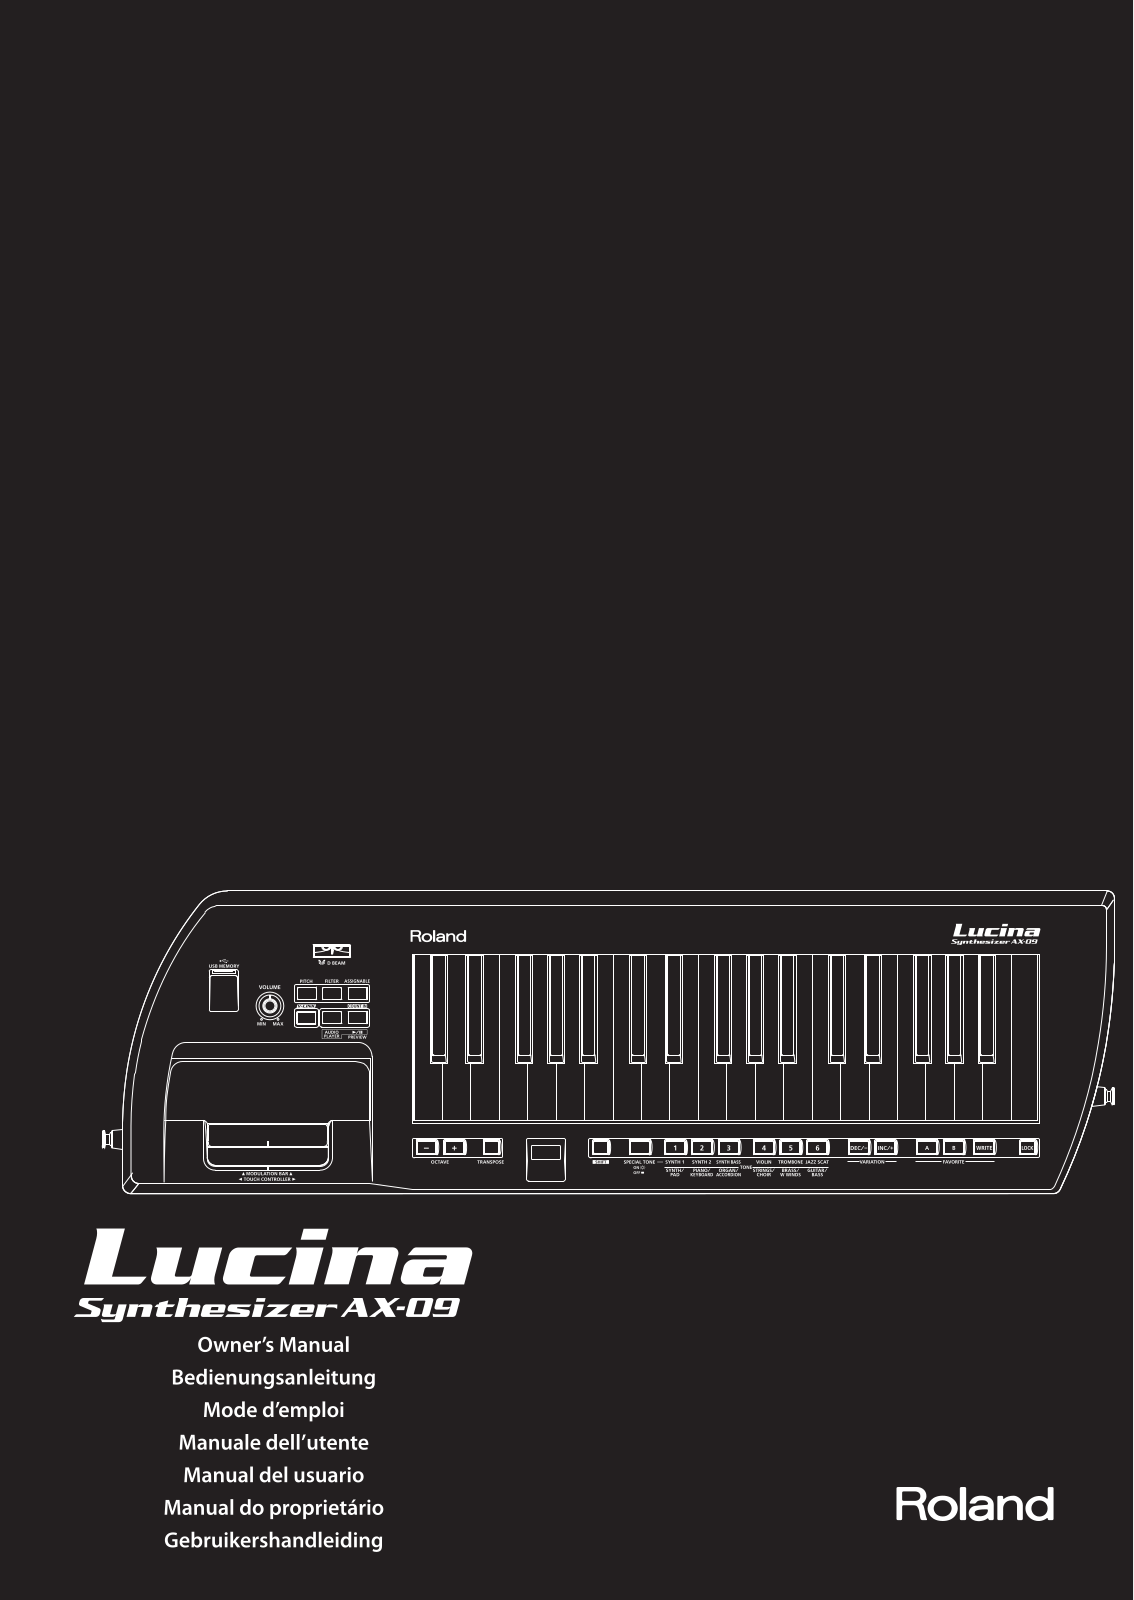 Roland LUCINA AX-09 User Manual